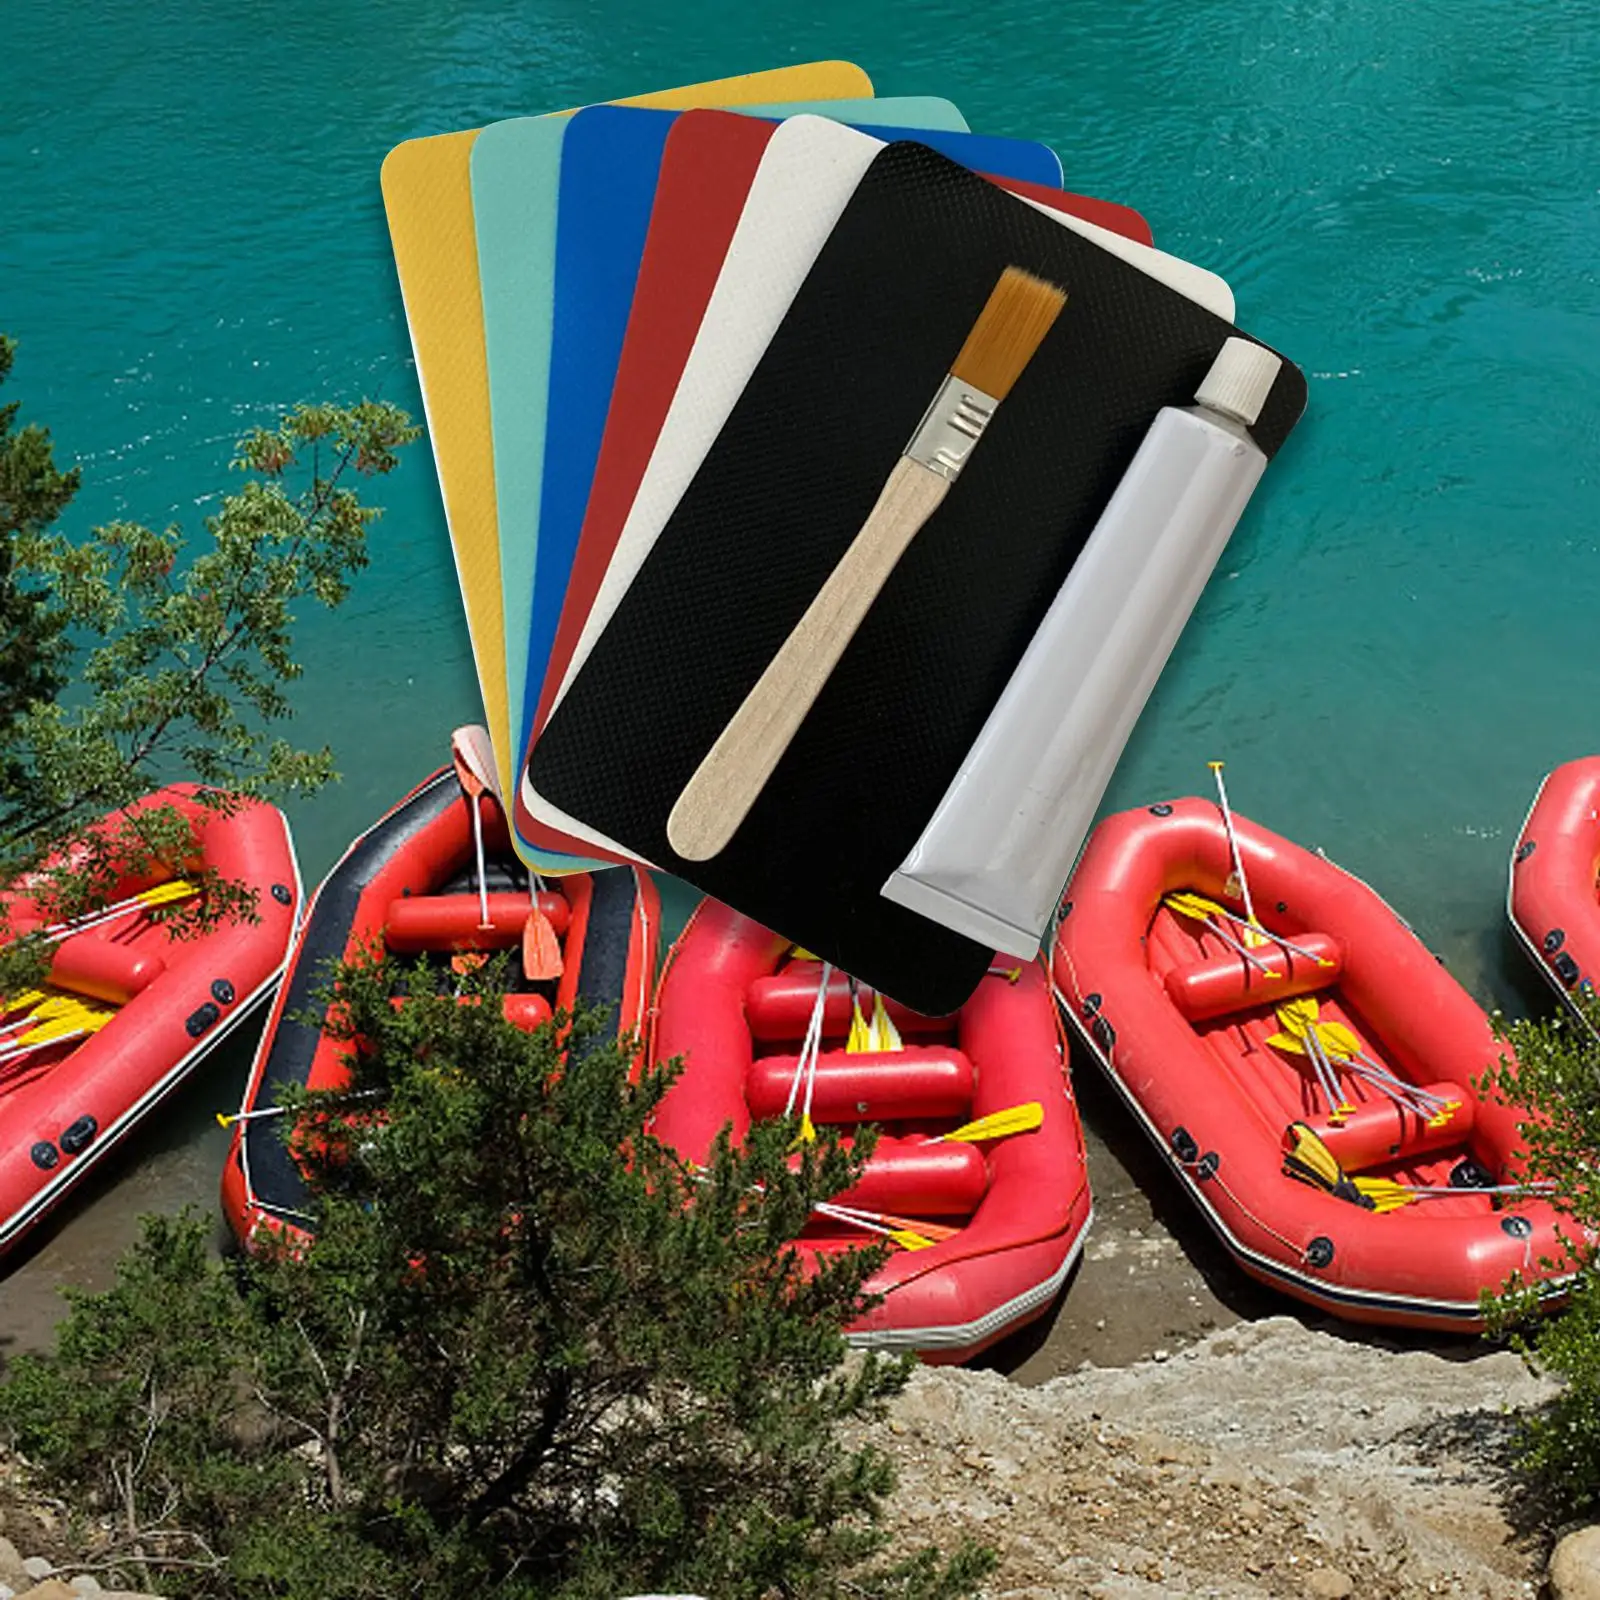 6pcs Inflatable Boat Repair, PVC Repair Patches Set Accessory for Inflatable Raft Boat Kayak